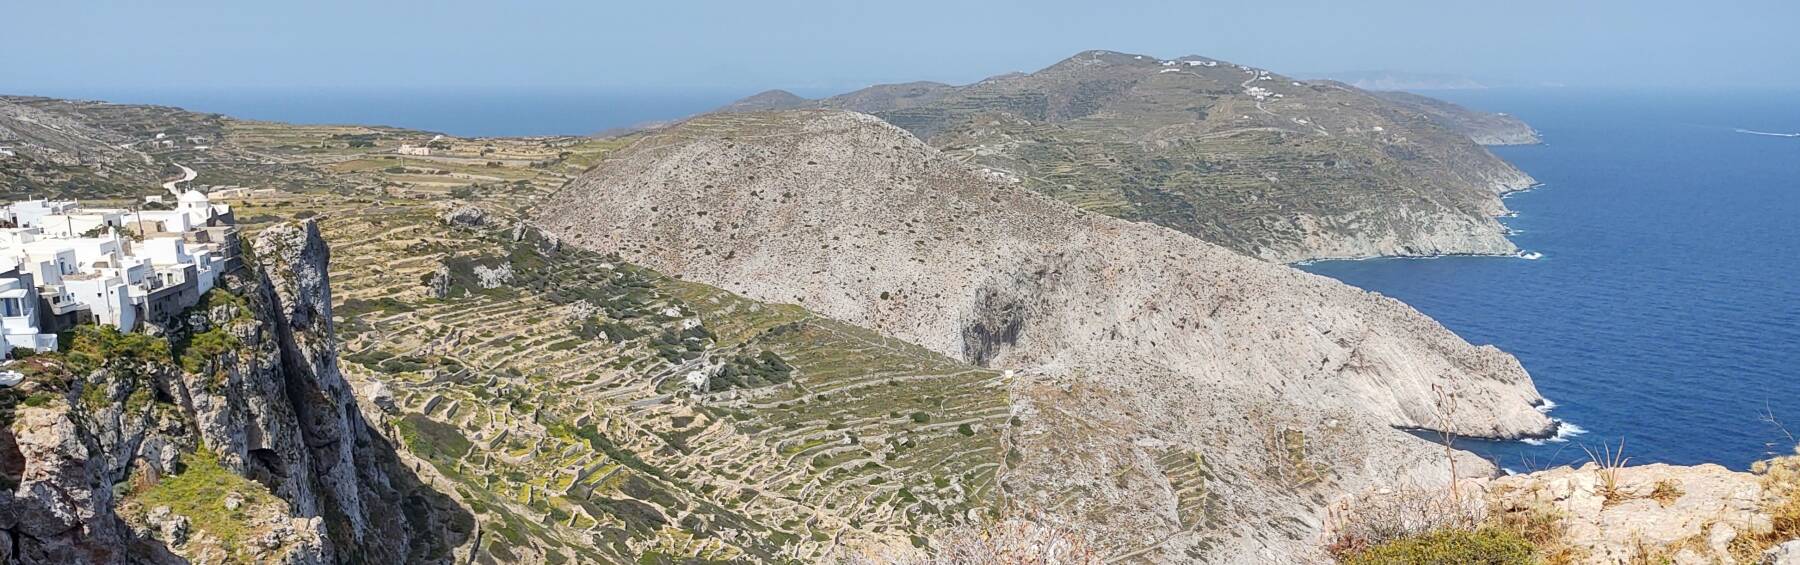 Hora on Folegandros on the edge of 200 meter cliffs.